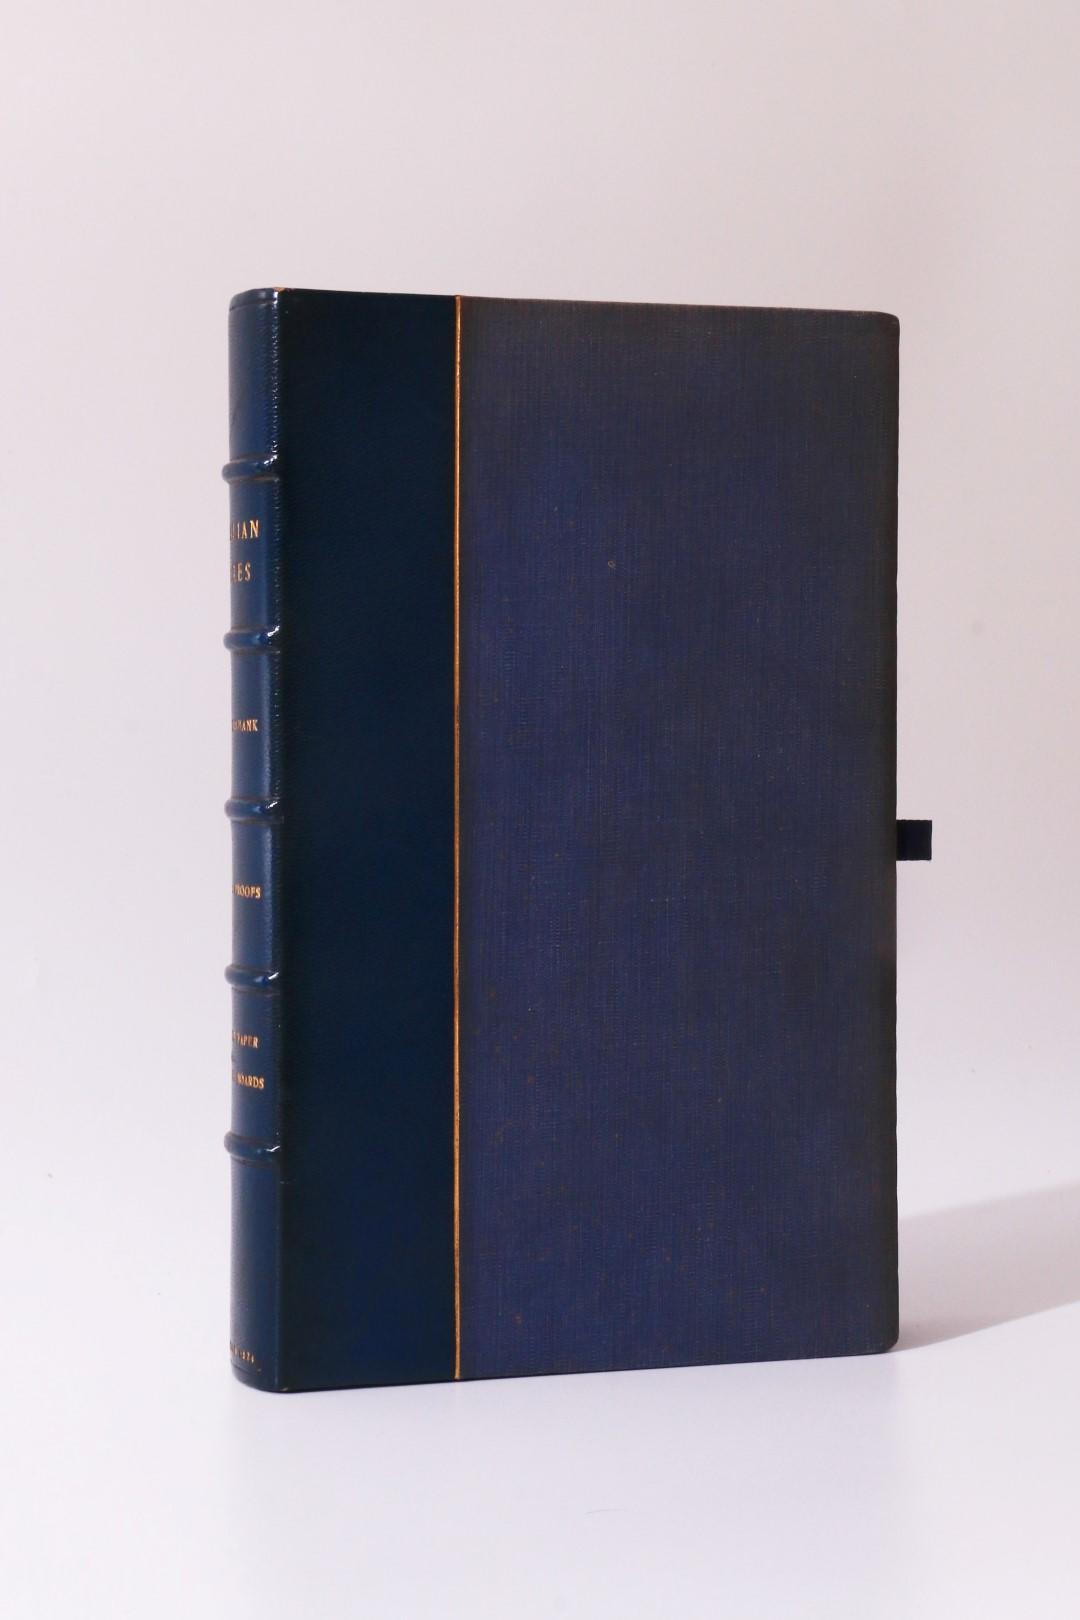 Anonymous [Thomas Roscoe] - Italian Tales: Tales of Humour, Gallantry, & Romance - Charles Baldwyn, 1824, First Edition.